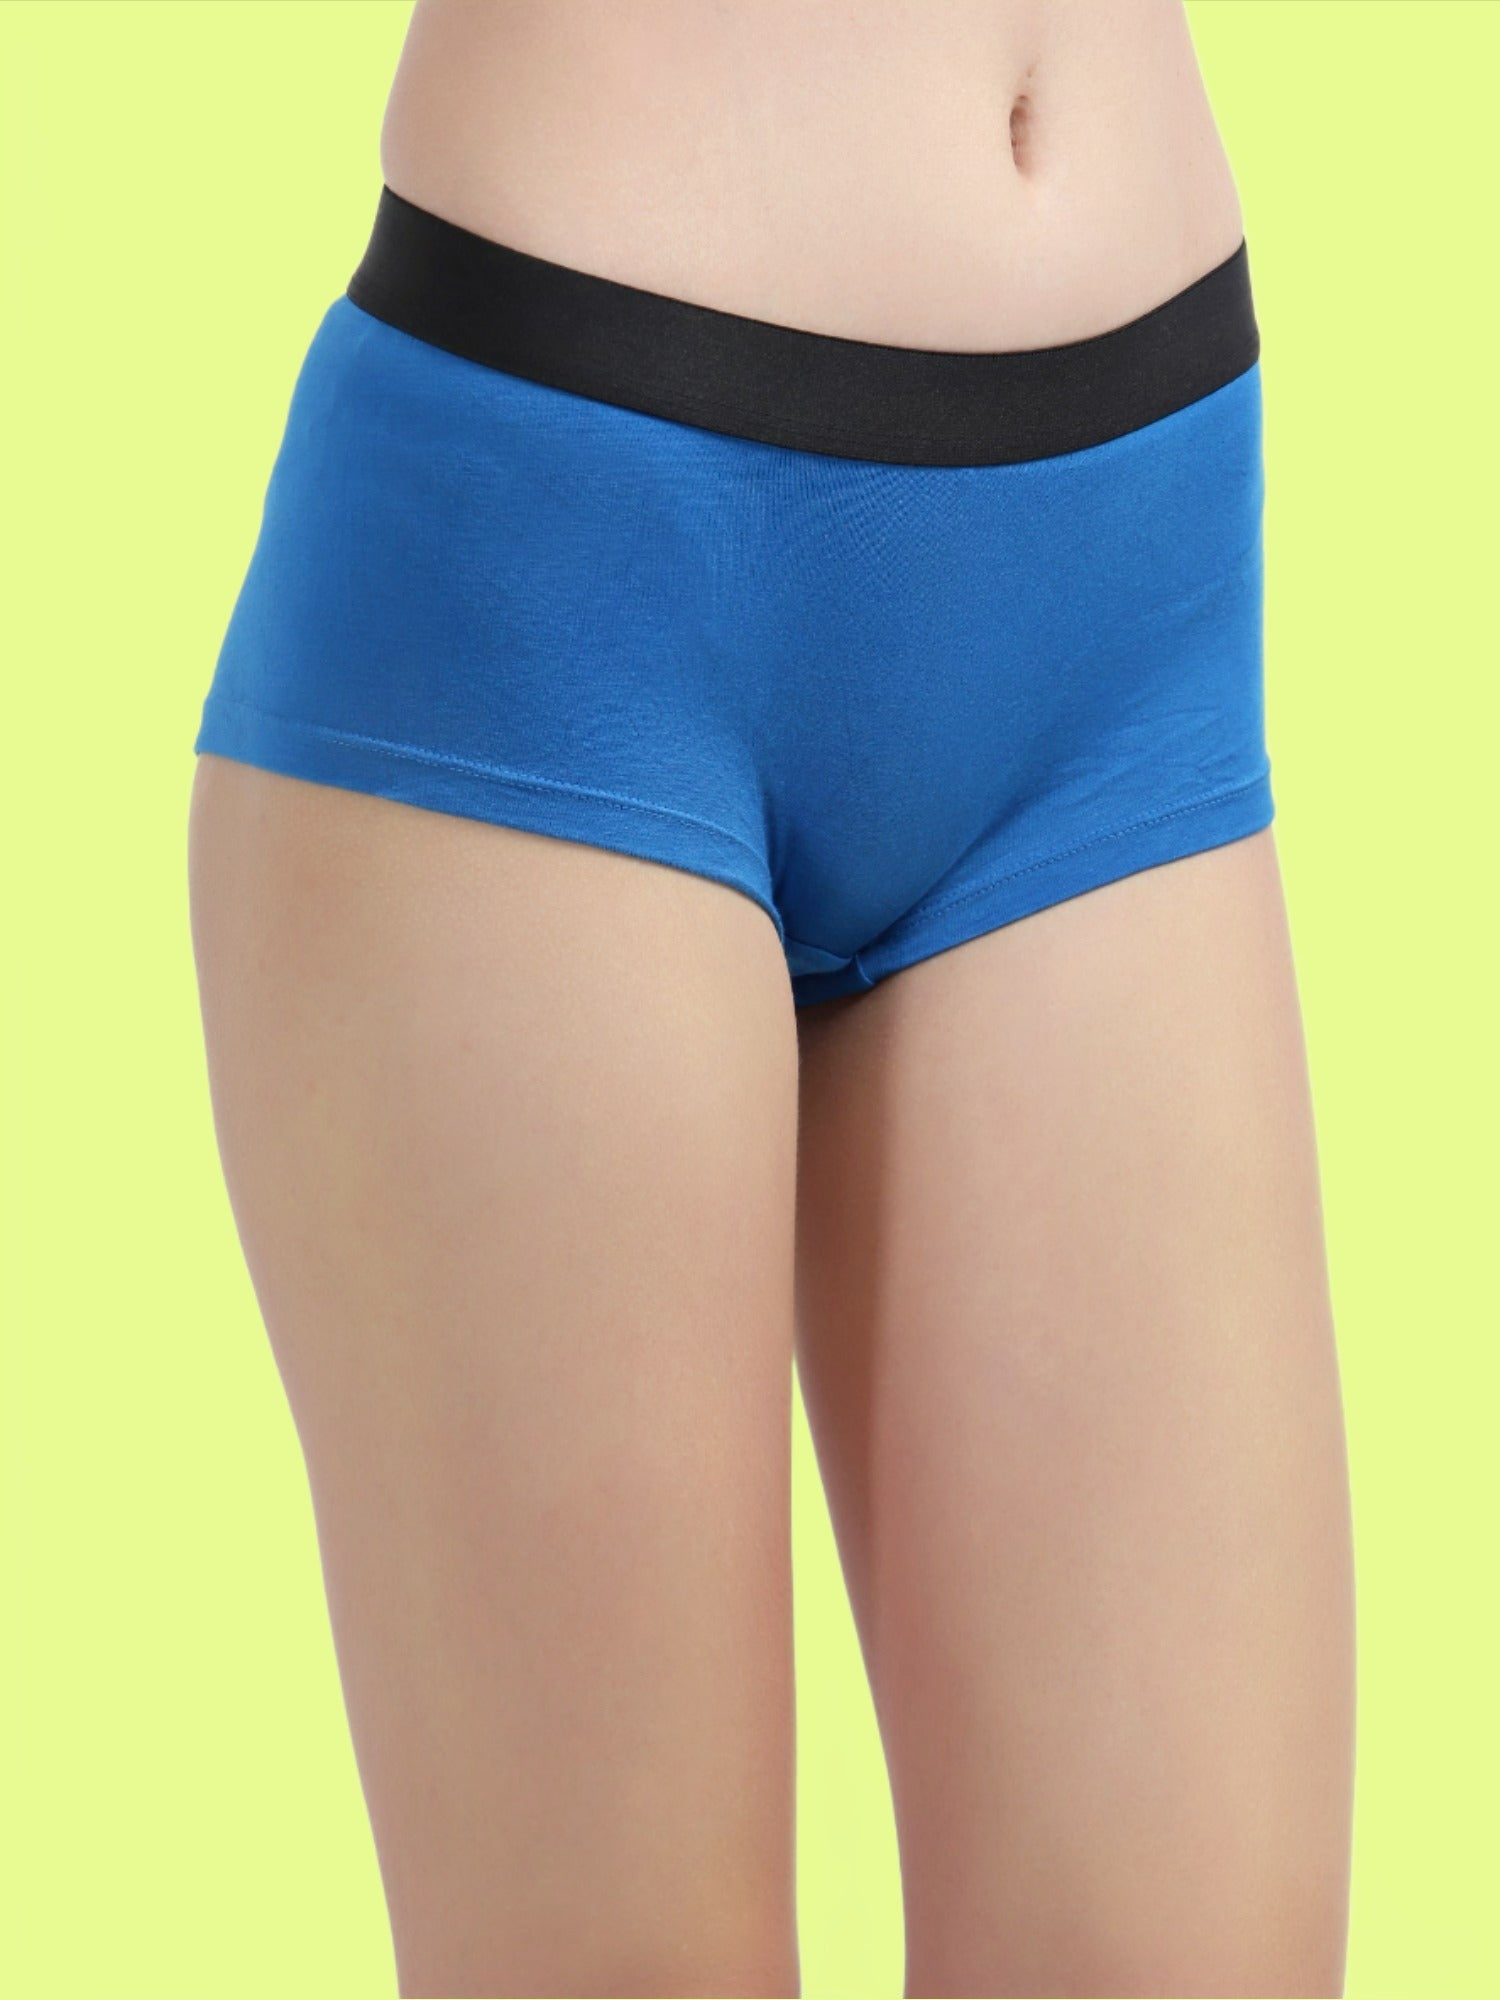 Blue Green Briefs  Women's Blue Green Panties, Gift For Her, Fashion  Underwear - MikeMBurkeDesigns